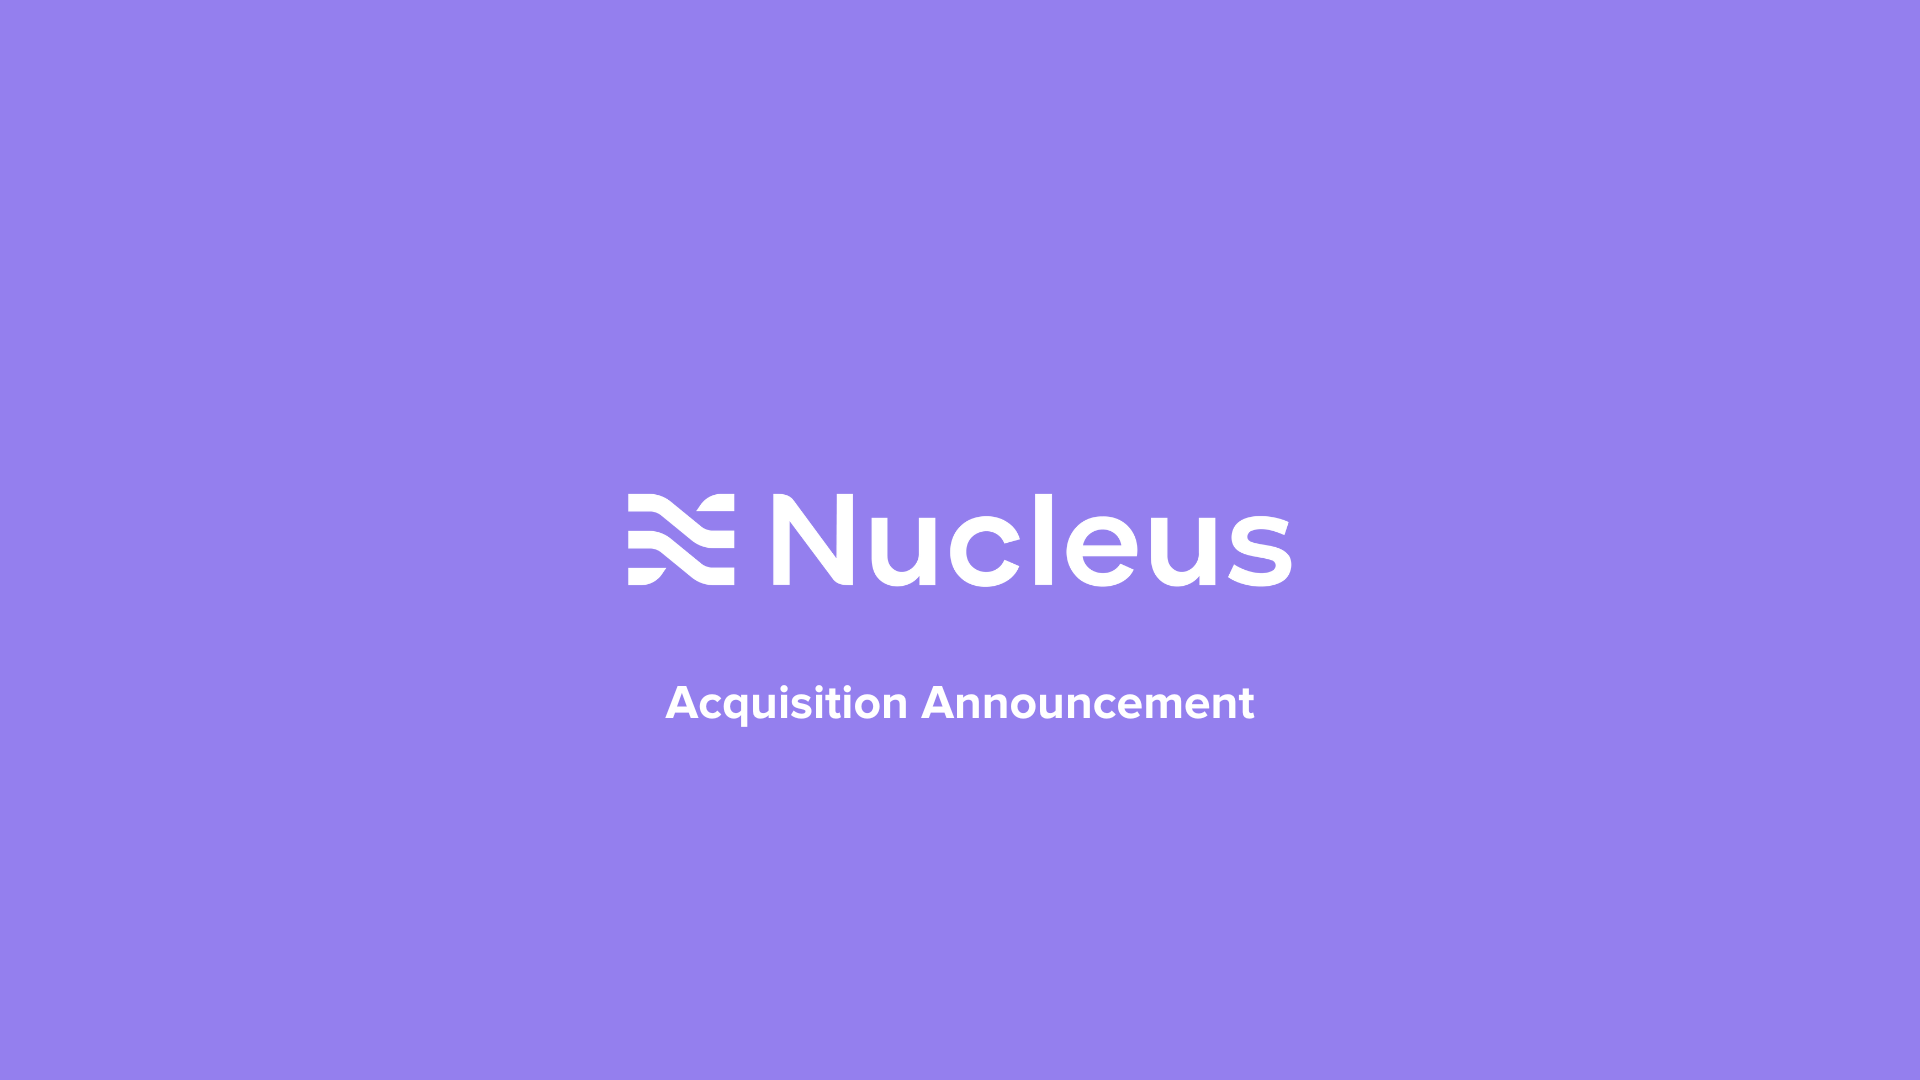 Nucleus Healthcare logo and acquisition announcement